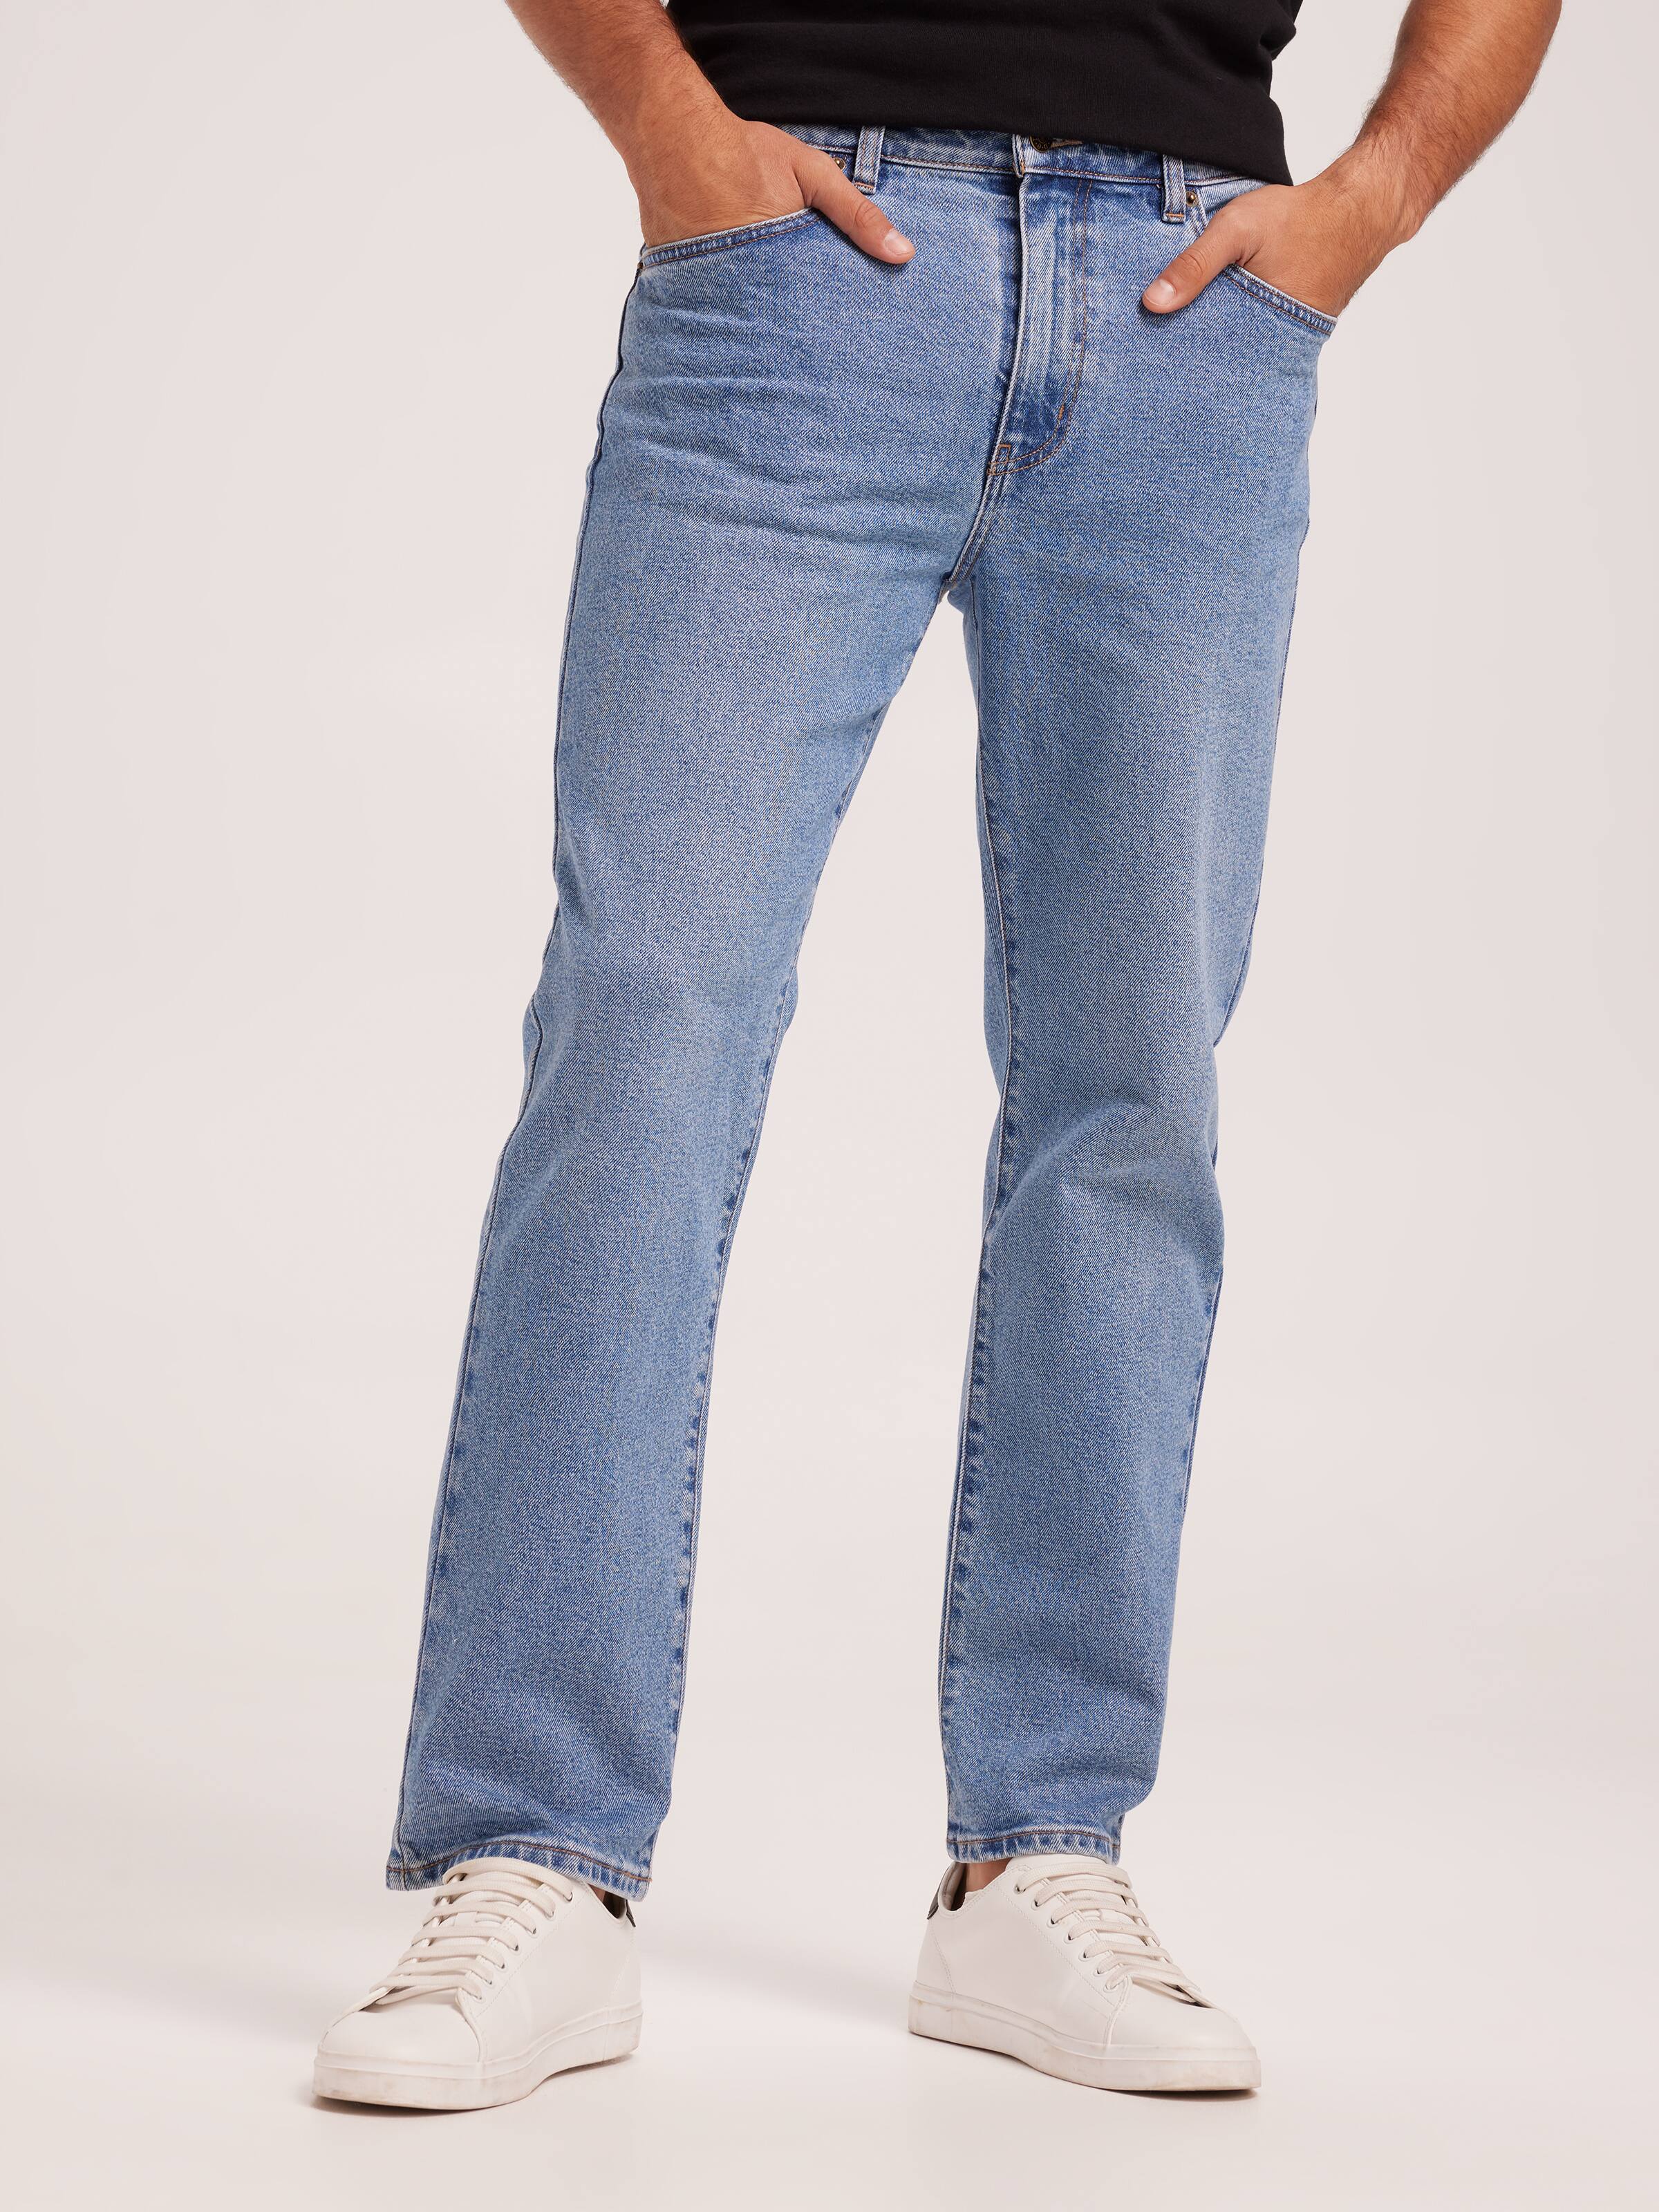 R4 Comfort Straight Jean In Origins Blue